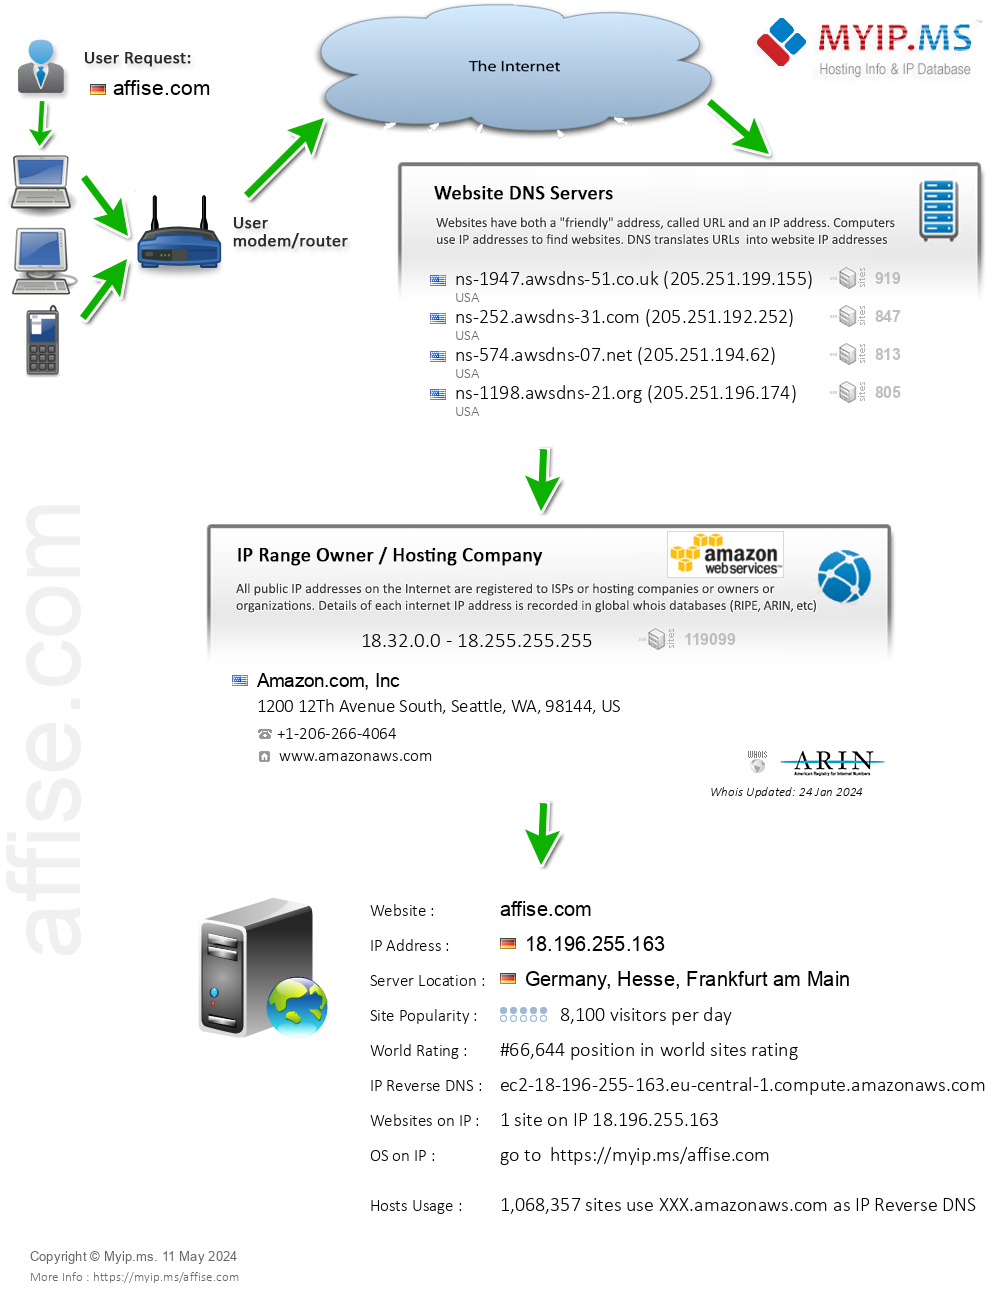 Affise.com - Website Hosting Visual IP Diagram